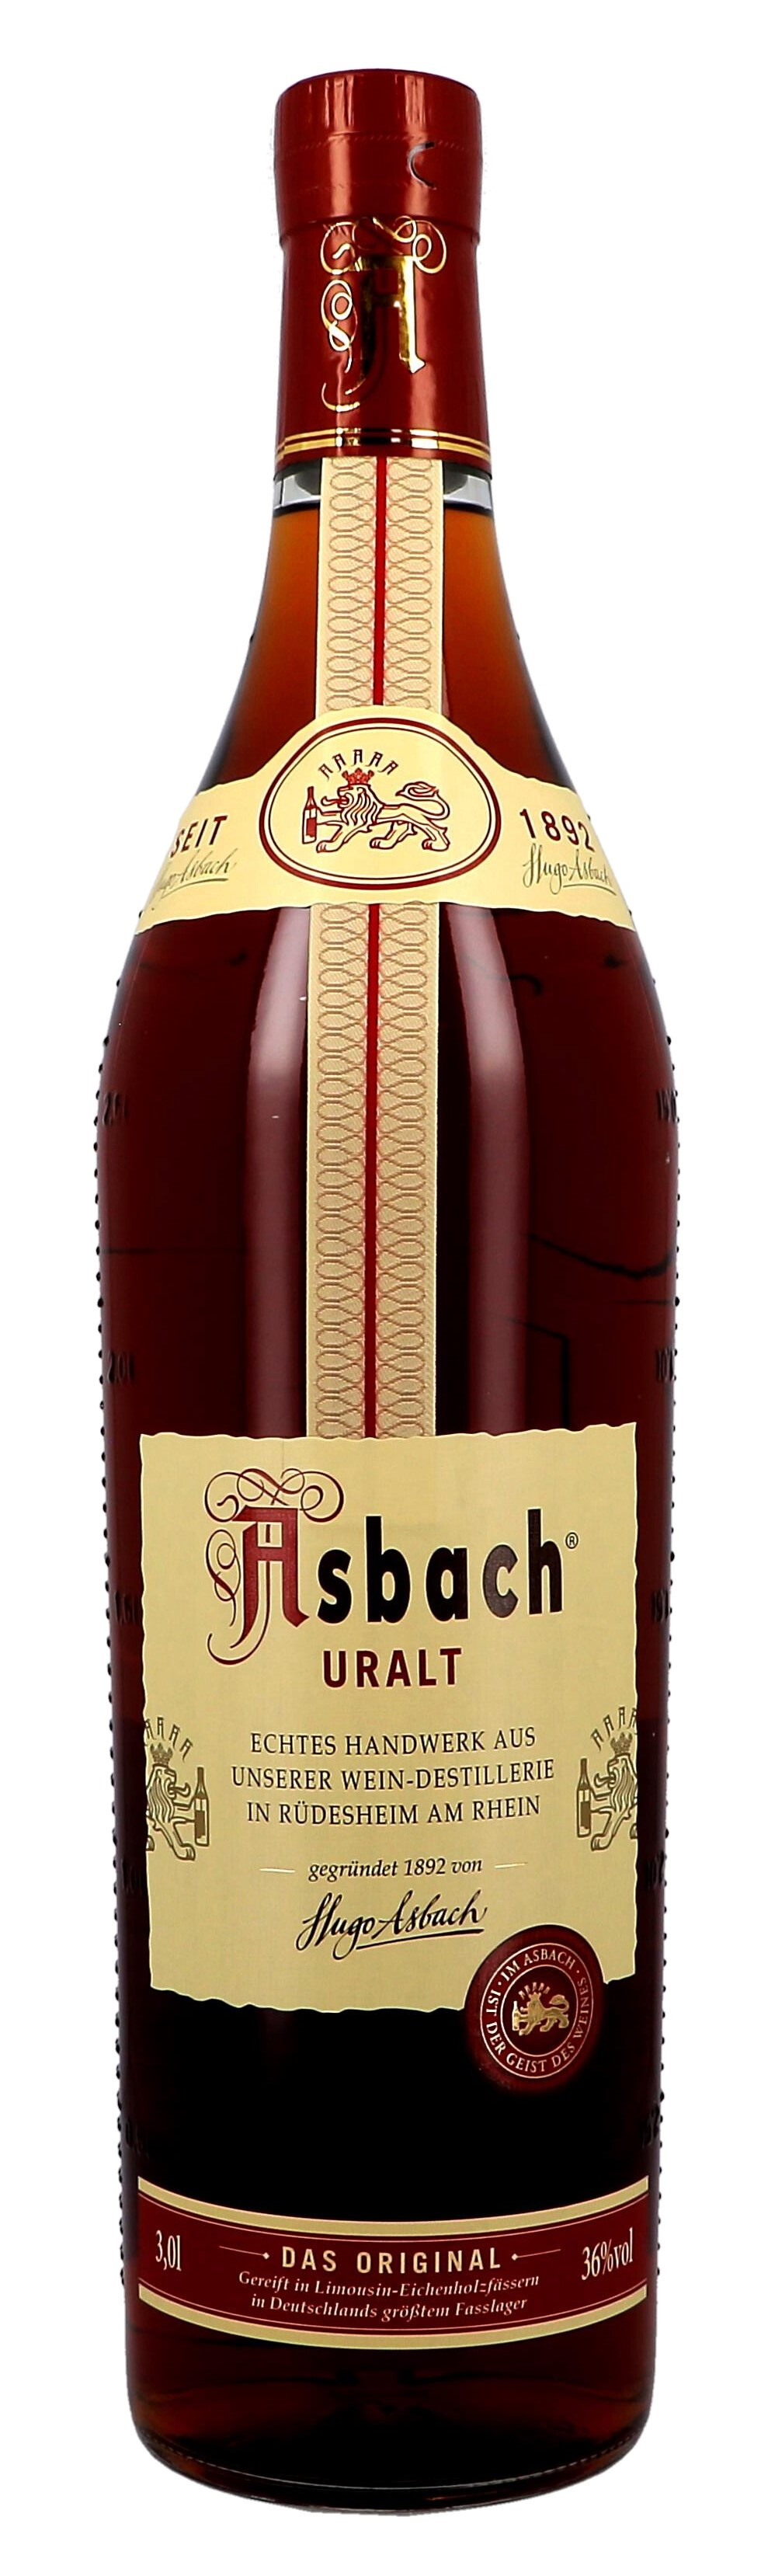 Asbach Uralt Original 3 Litre 38% Brandy - Germany